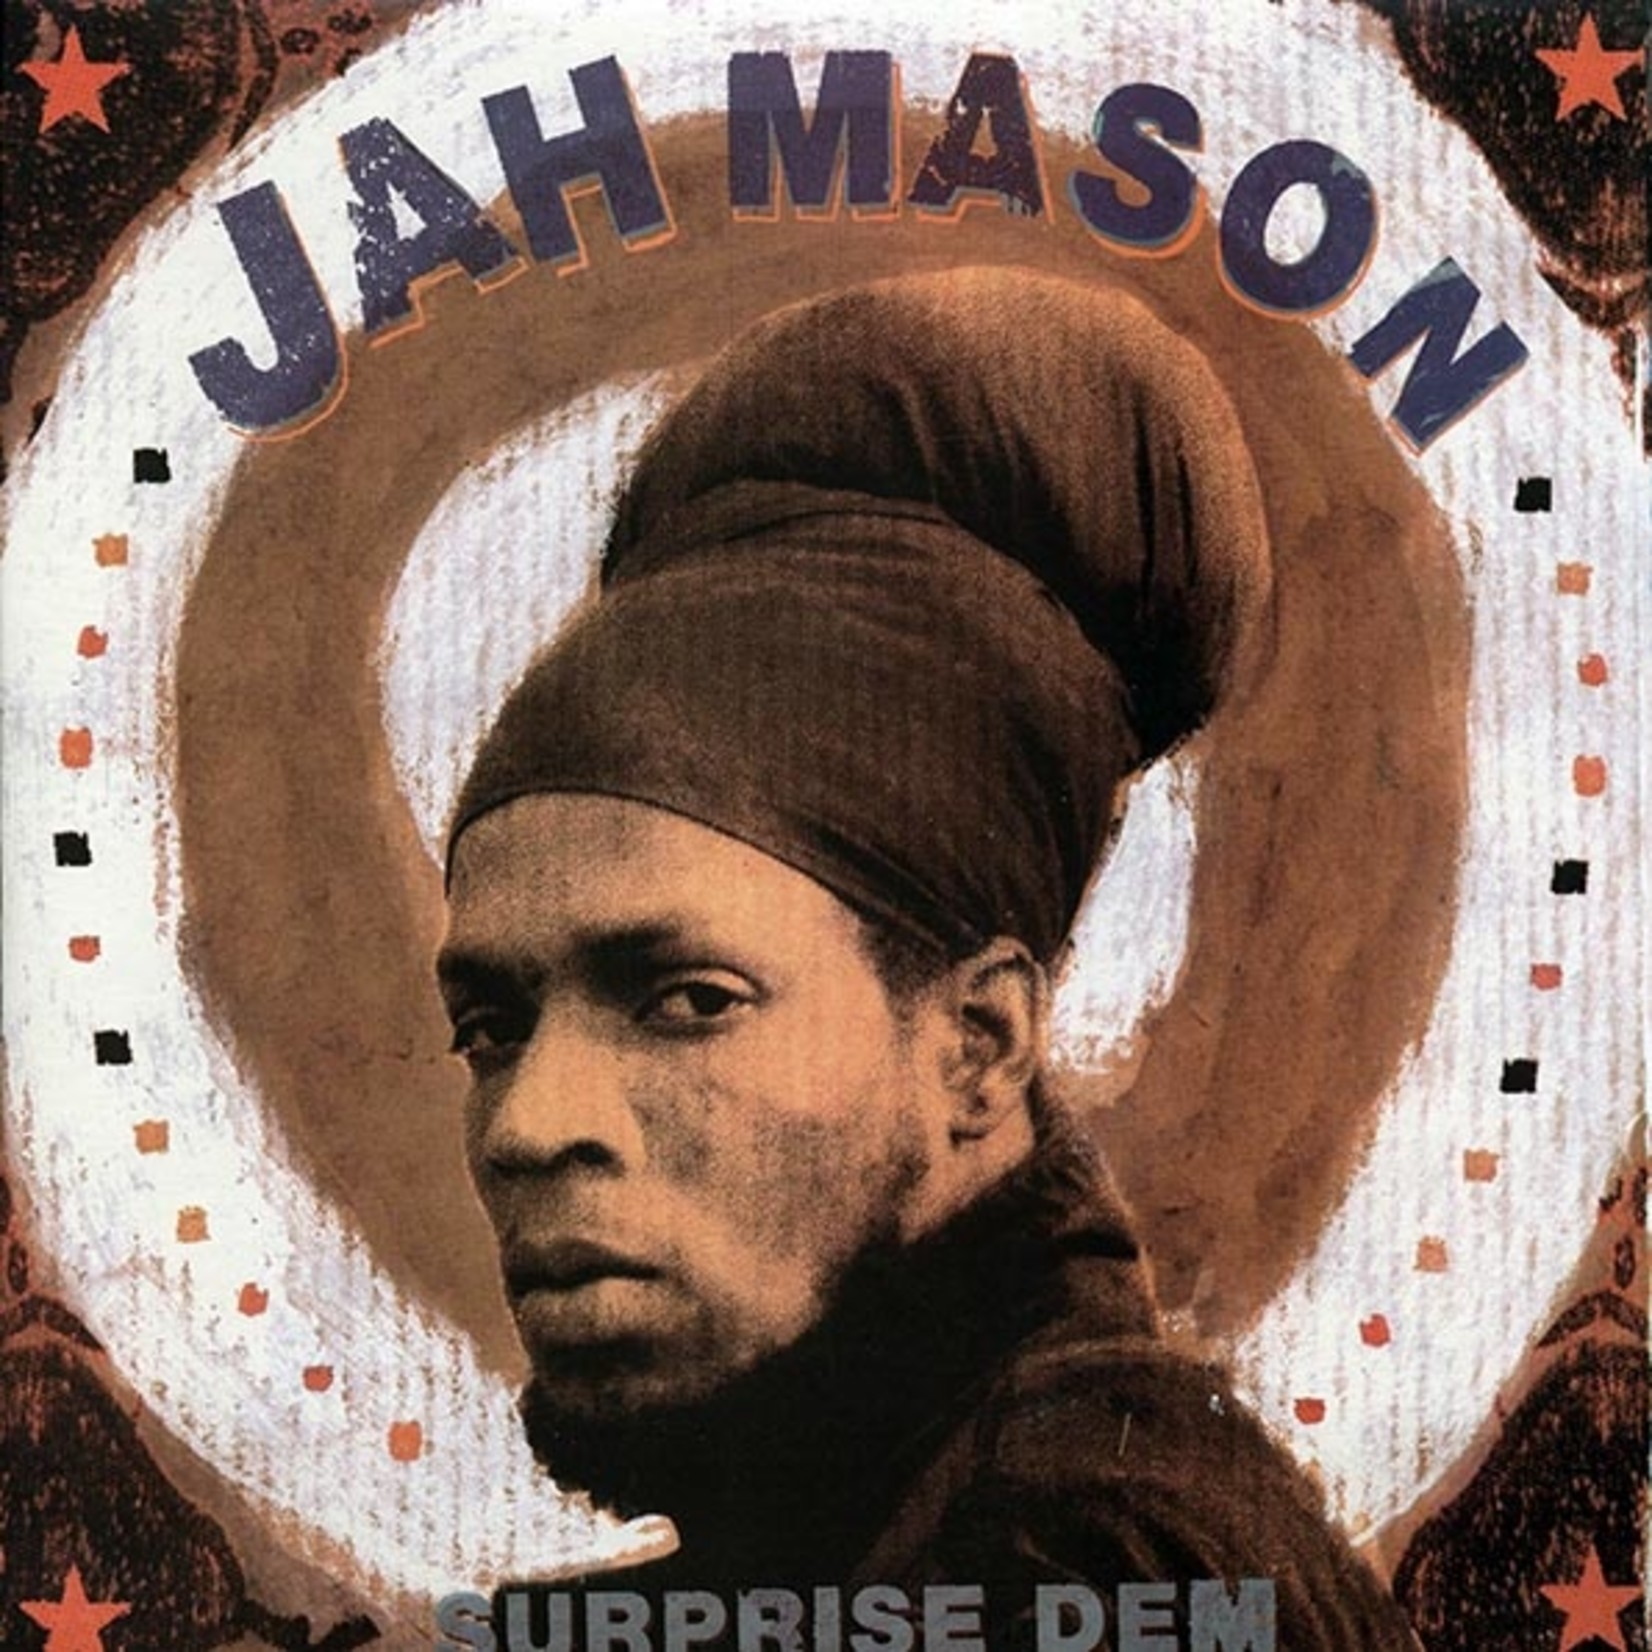 Jah Mason - Surprise Dem (Vikings) (Orig. Press)